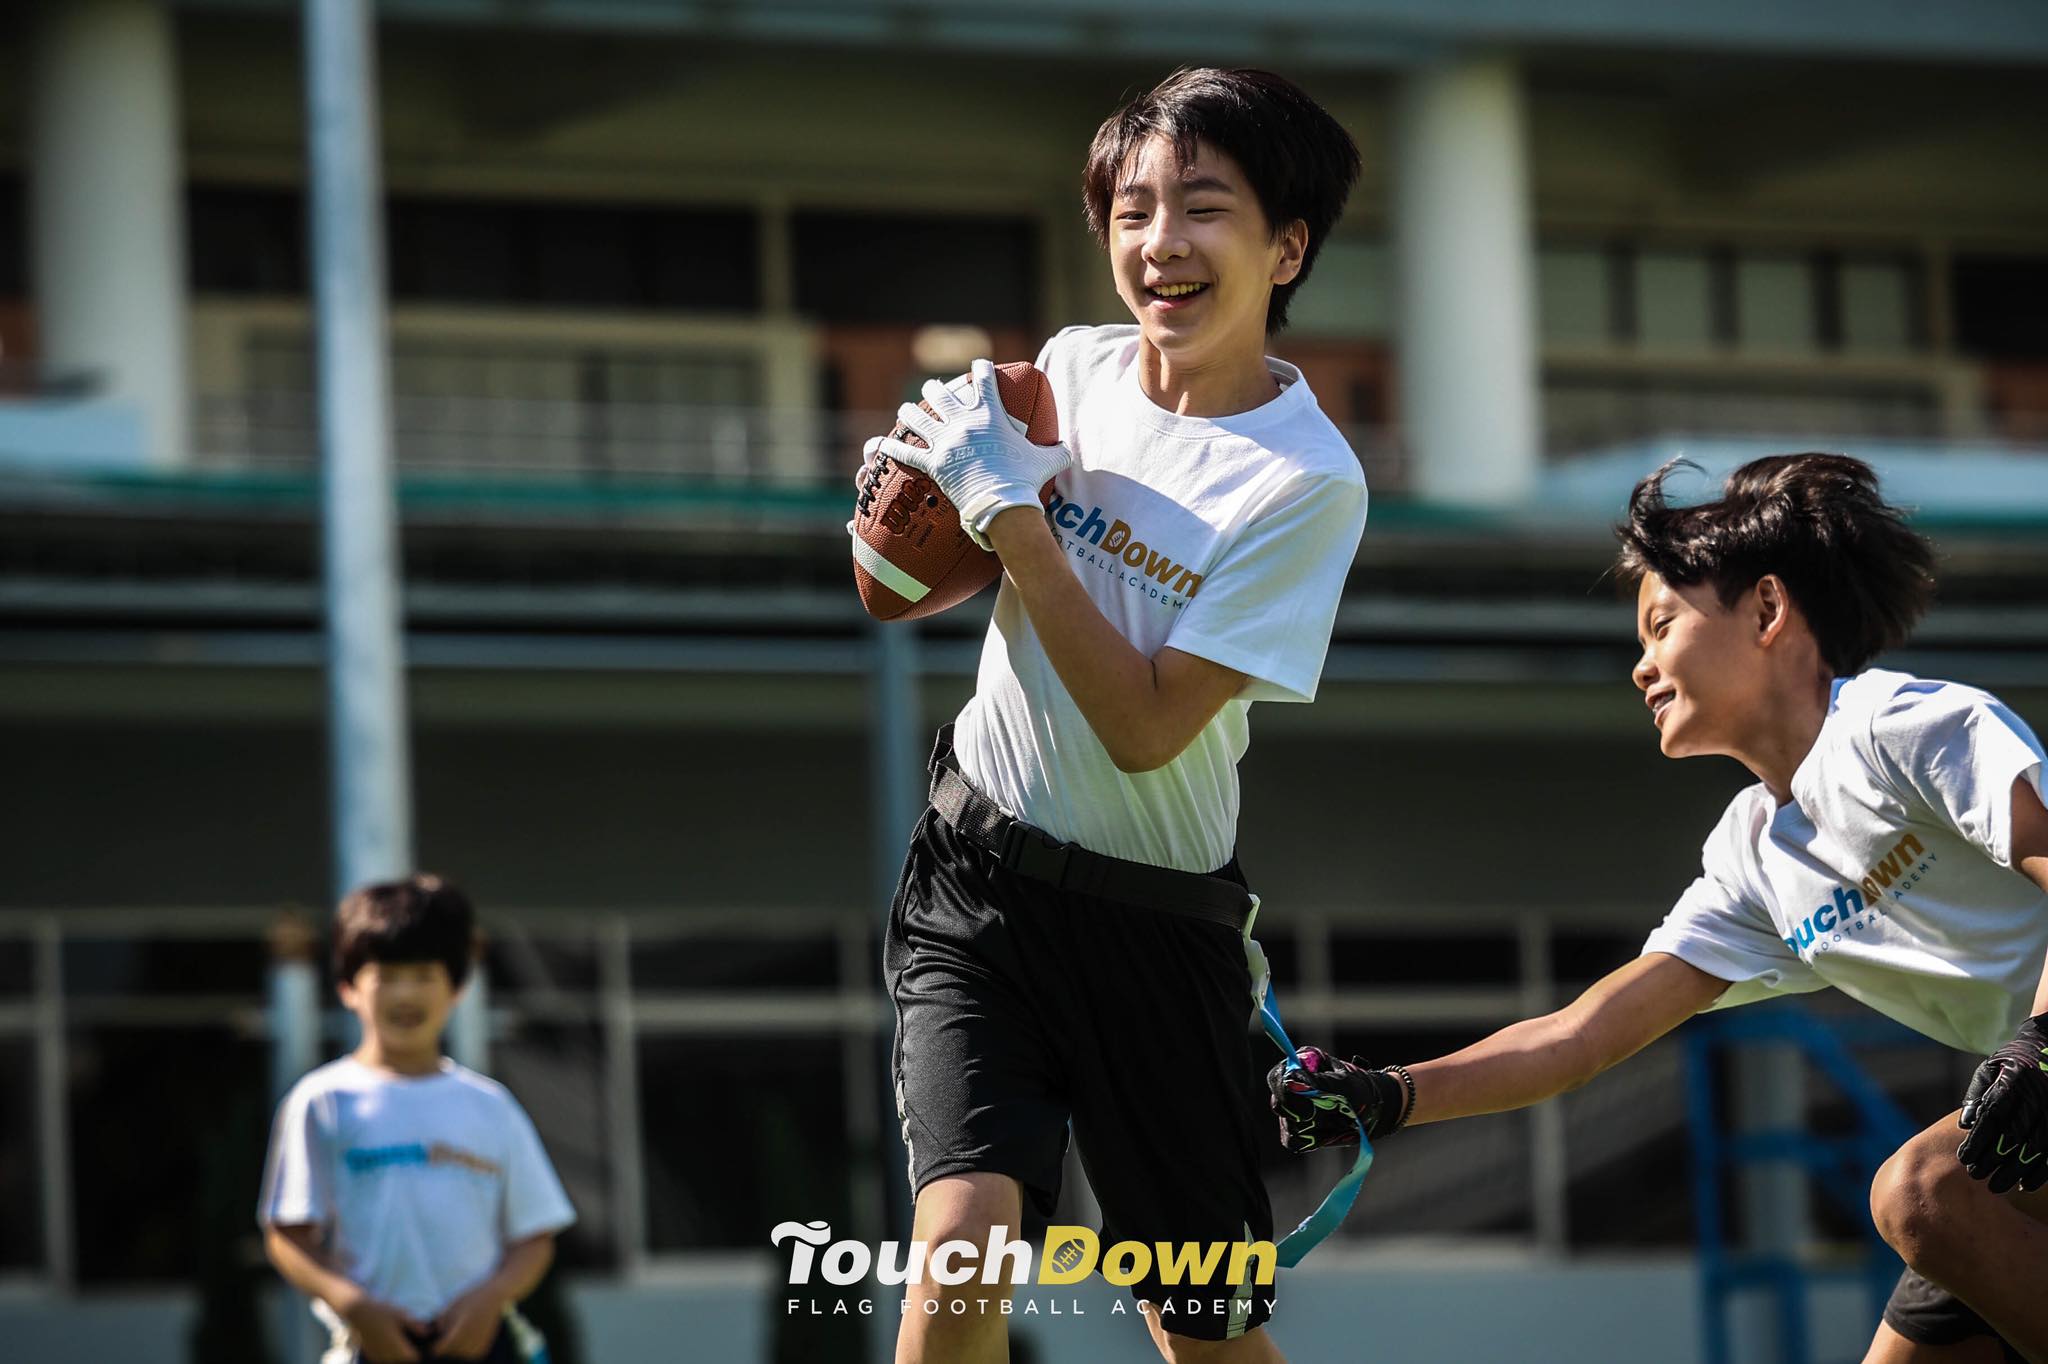 Touchdown Flag Football Academy